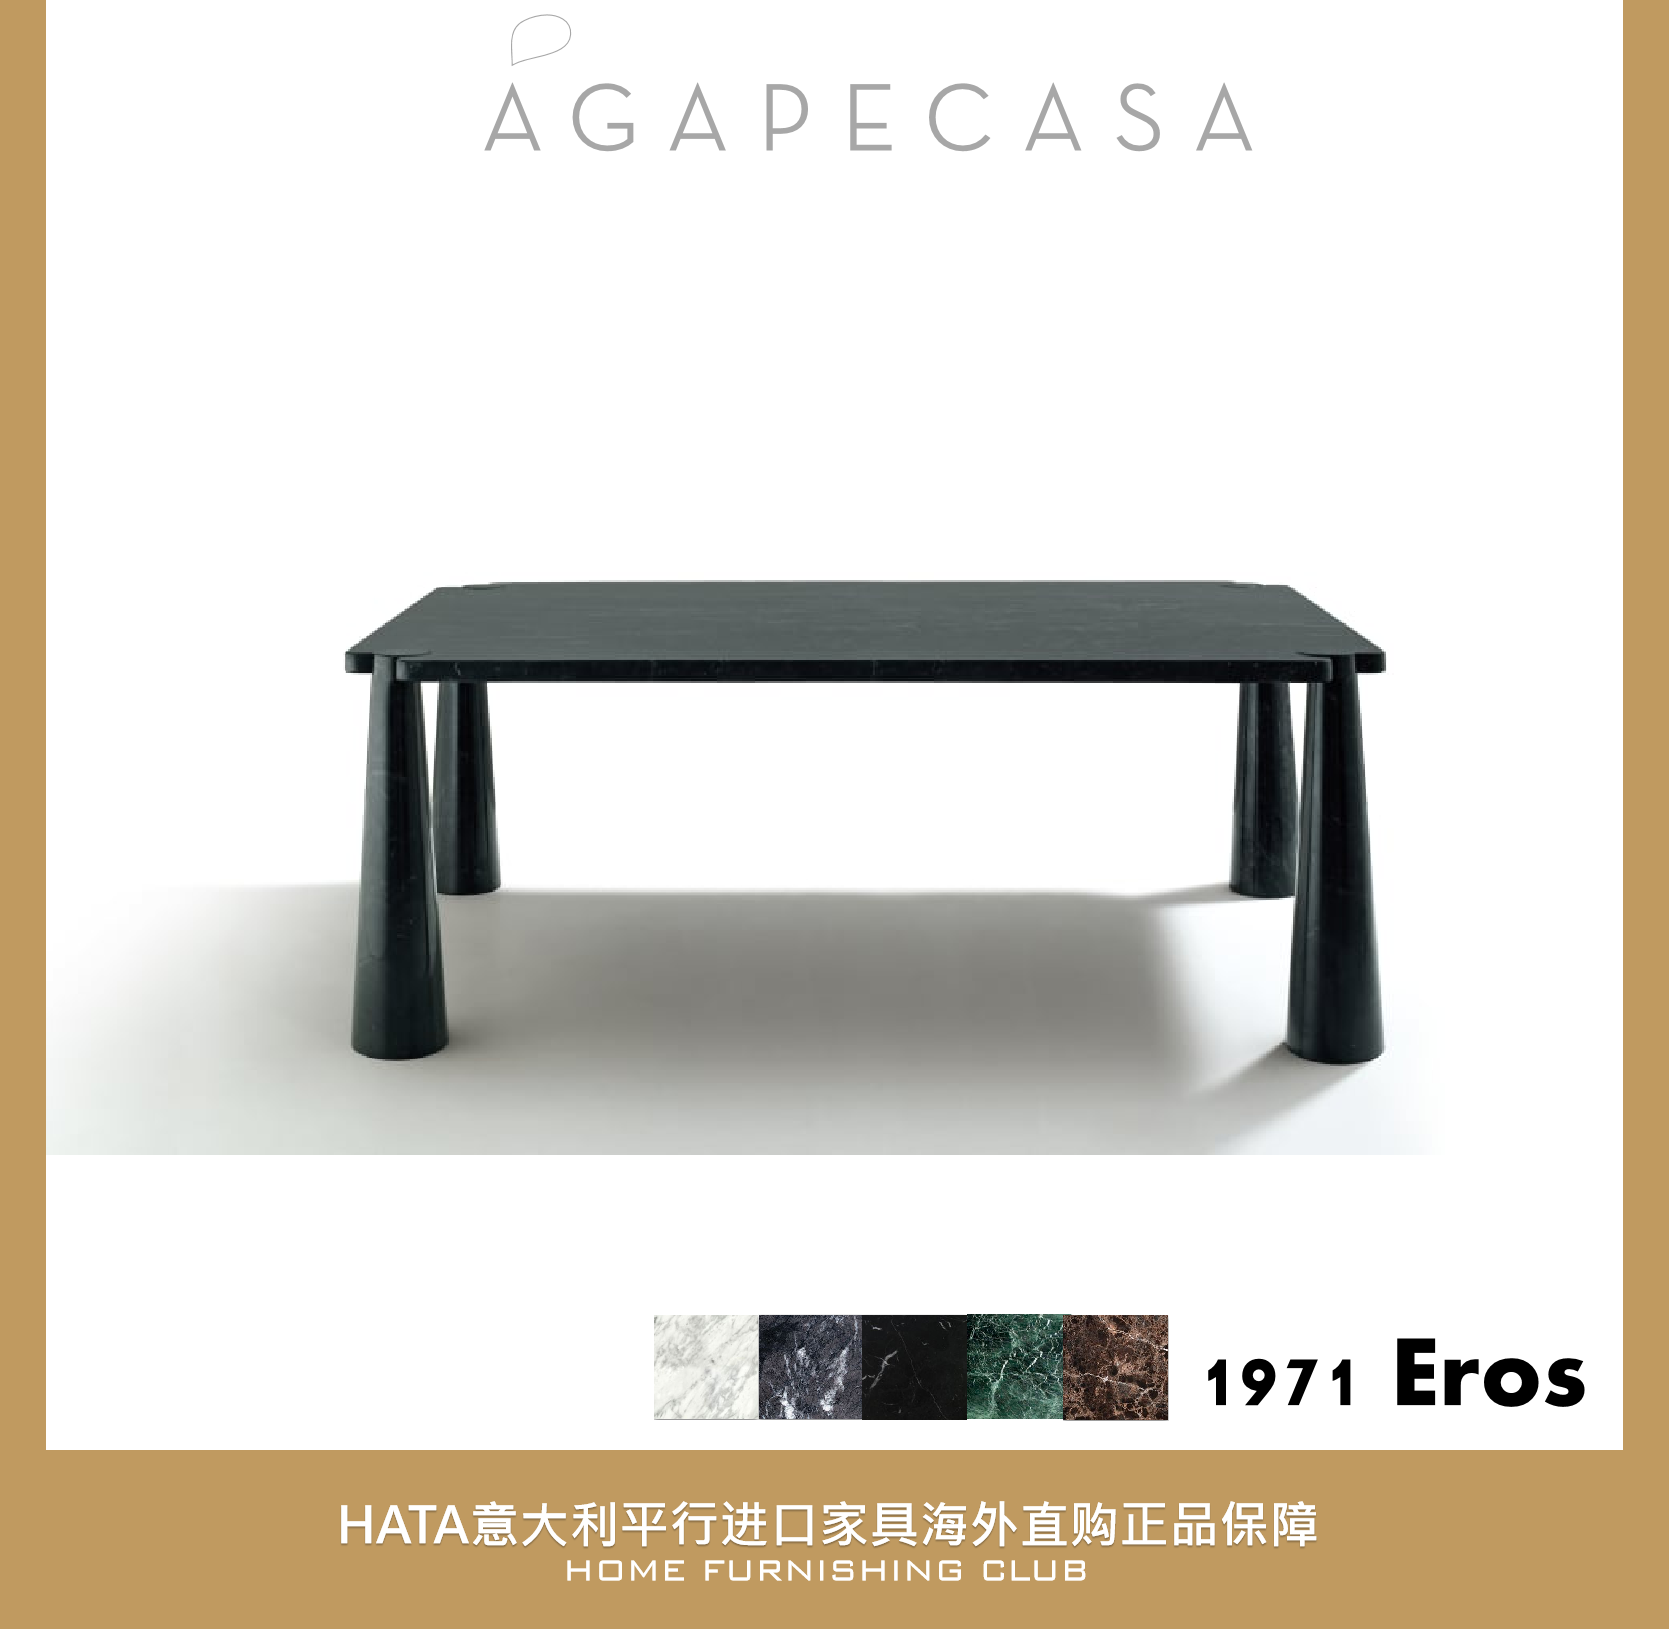 agapecasa 大理石餐桌茶几玄关 意大利平行进口家具代购正版 Eros